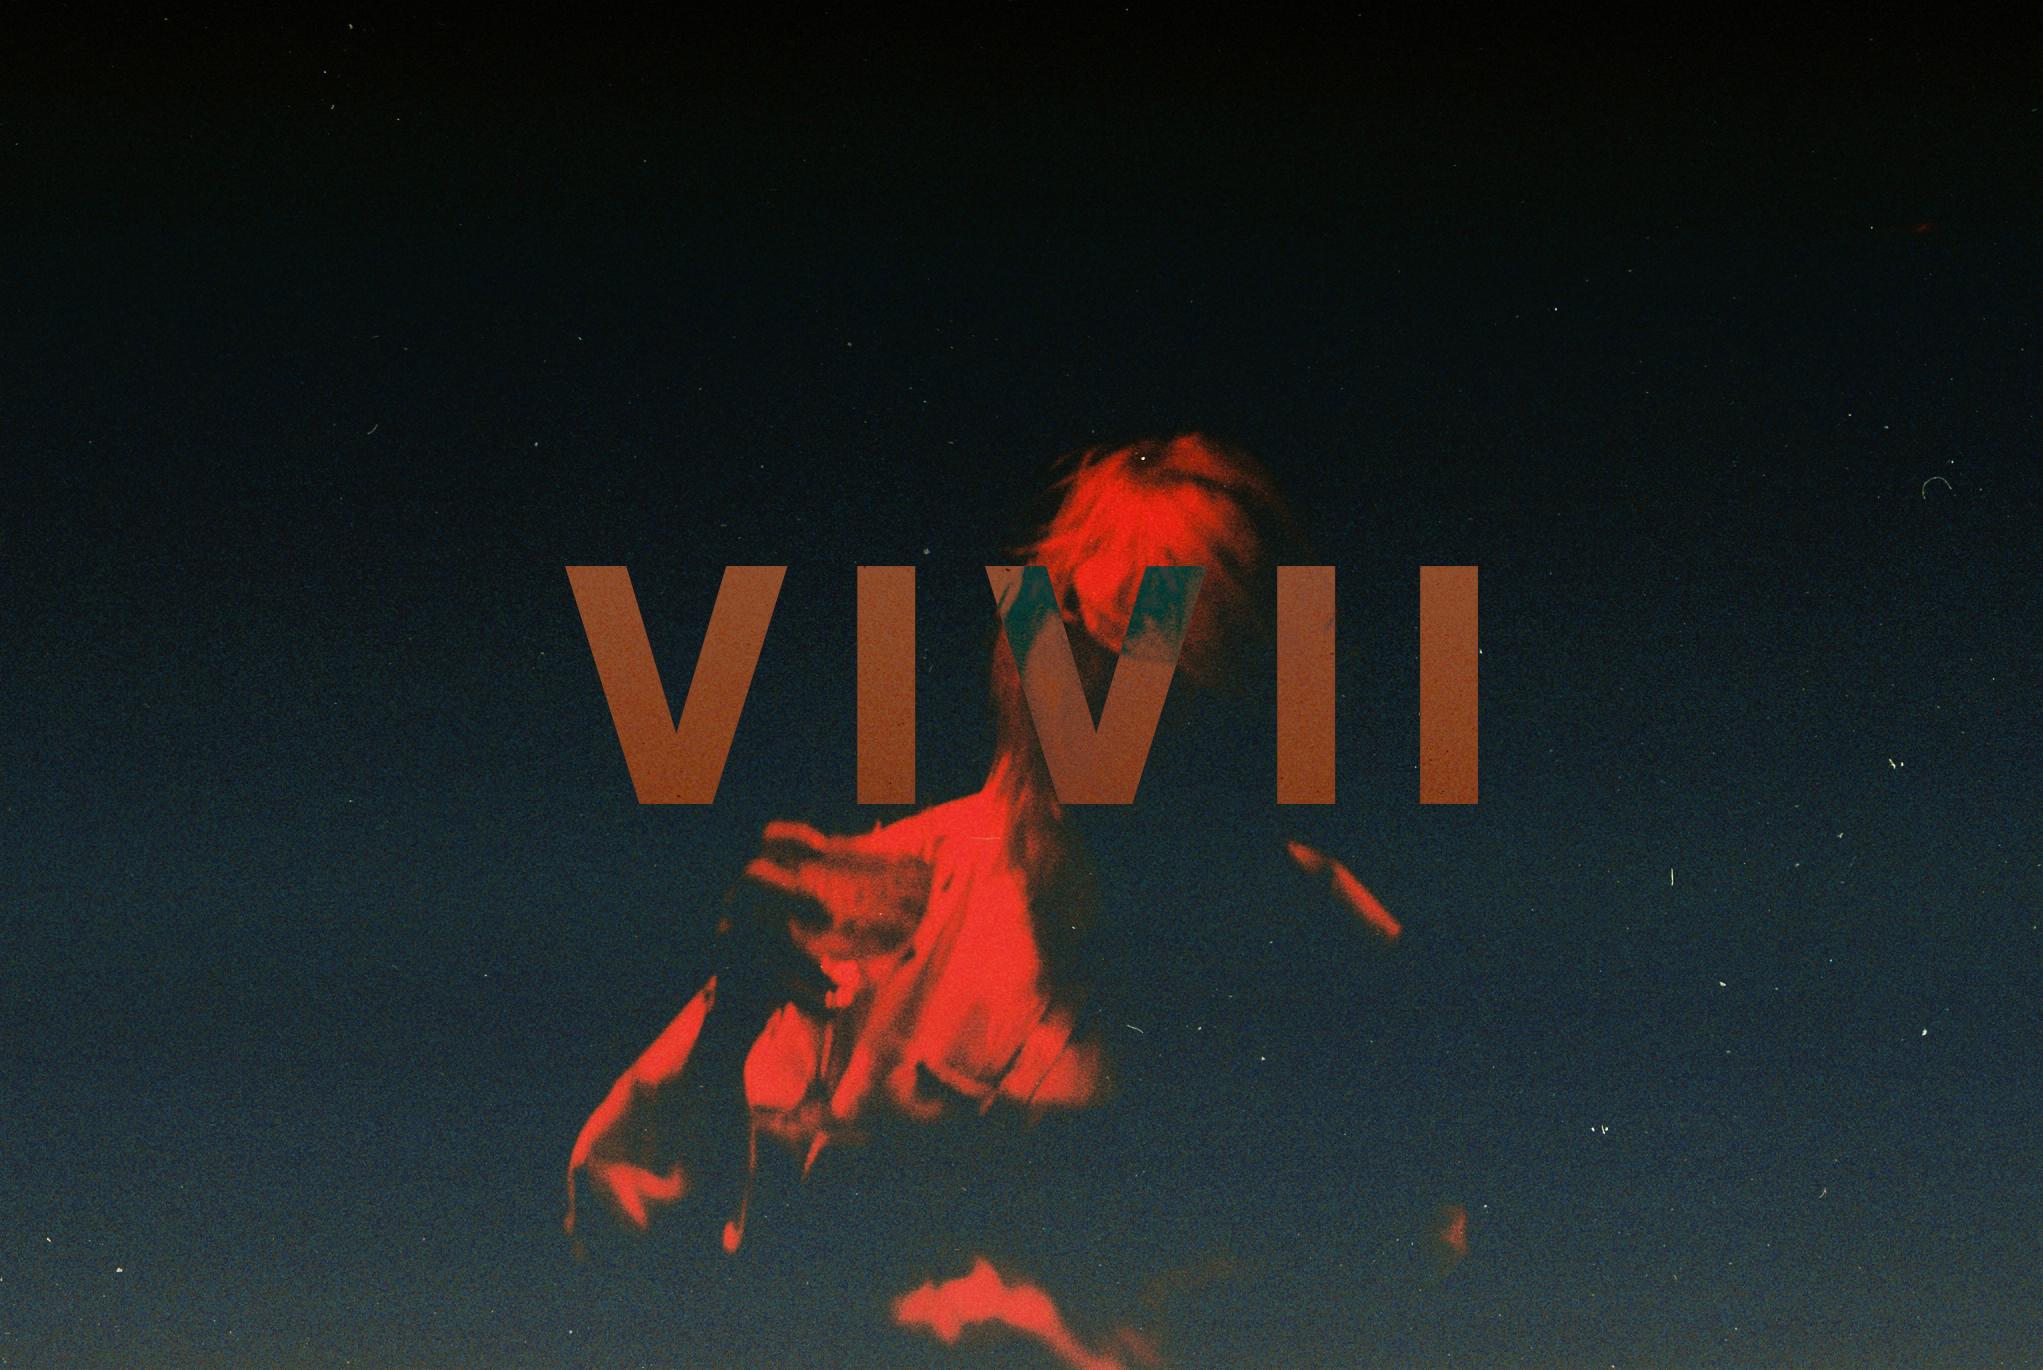 ViVii – And Tragic